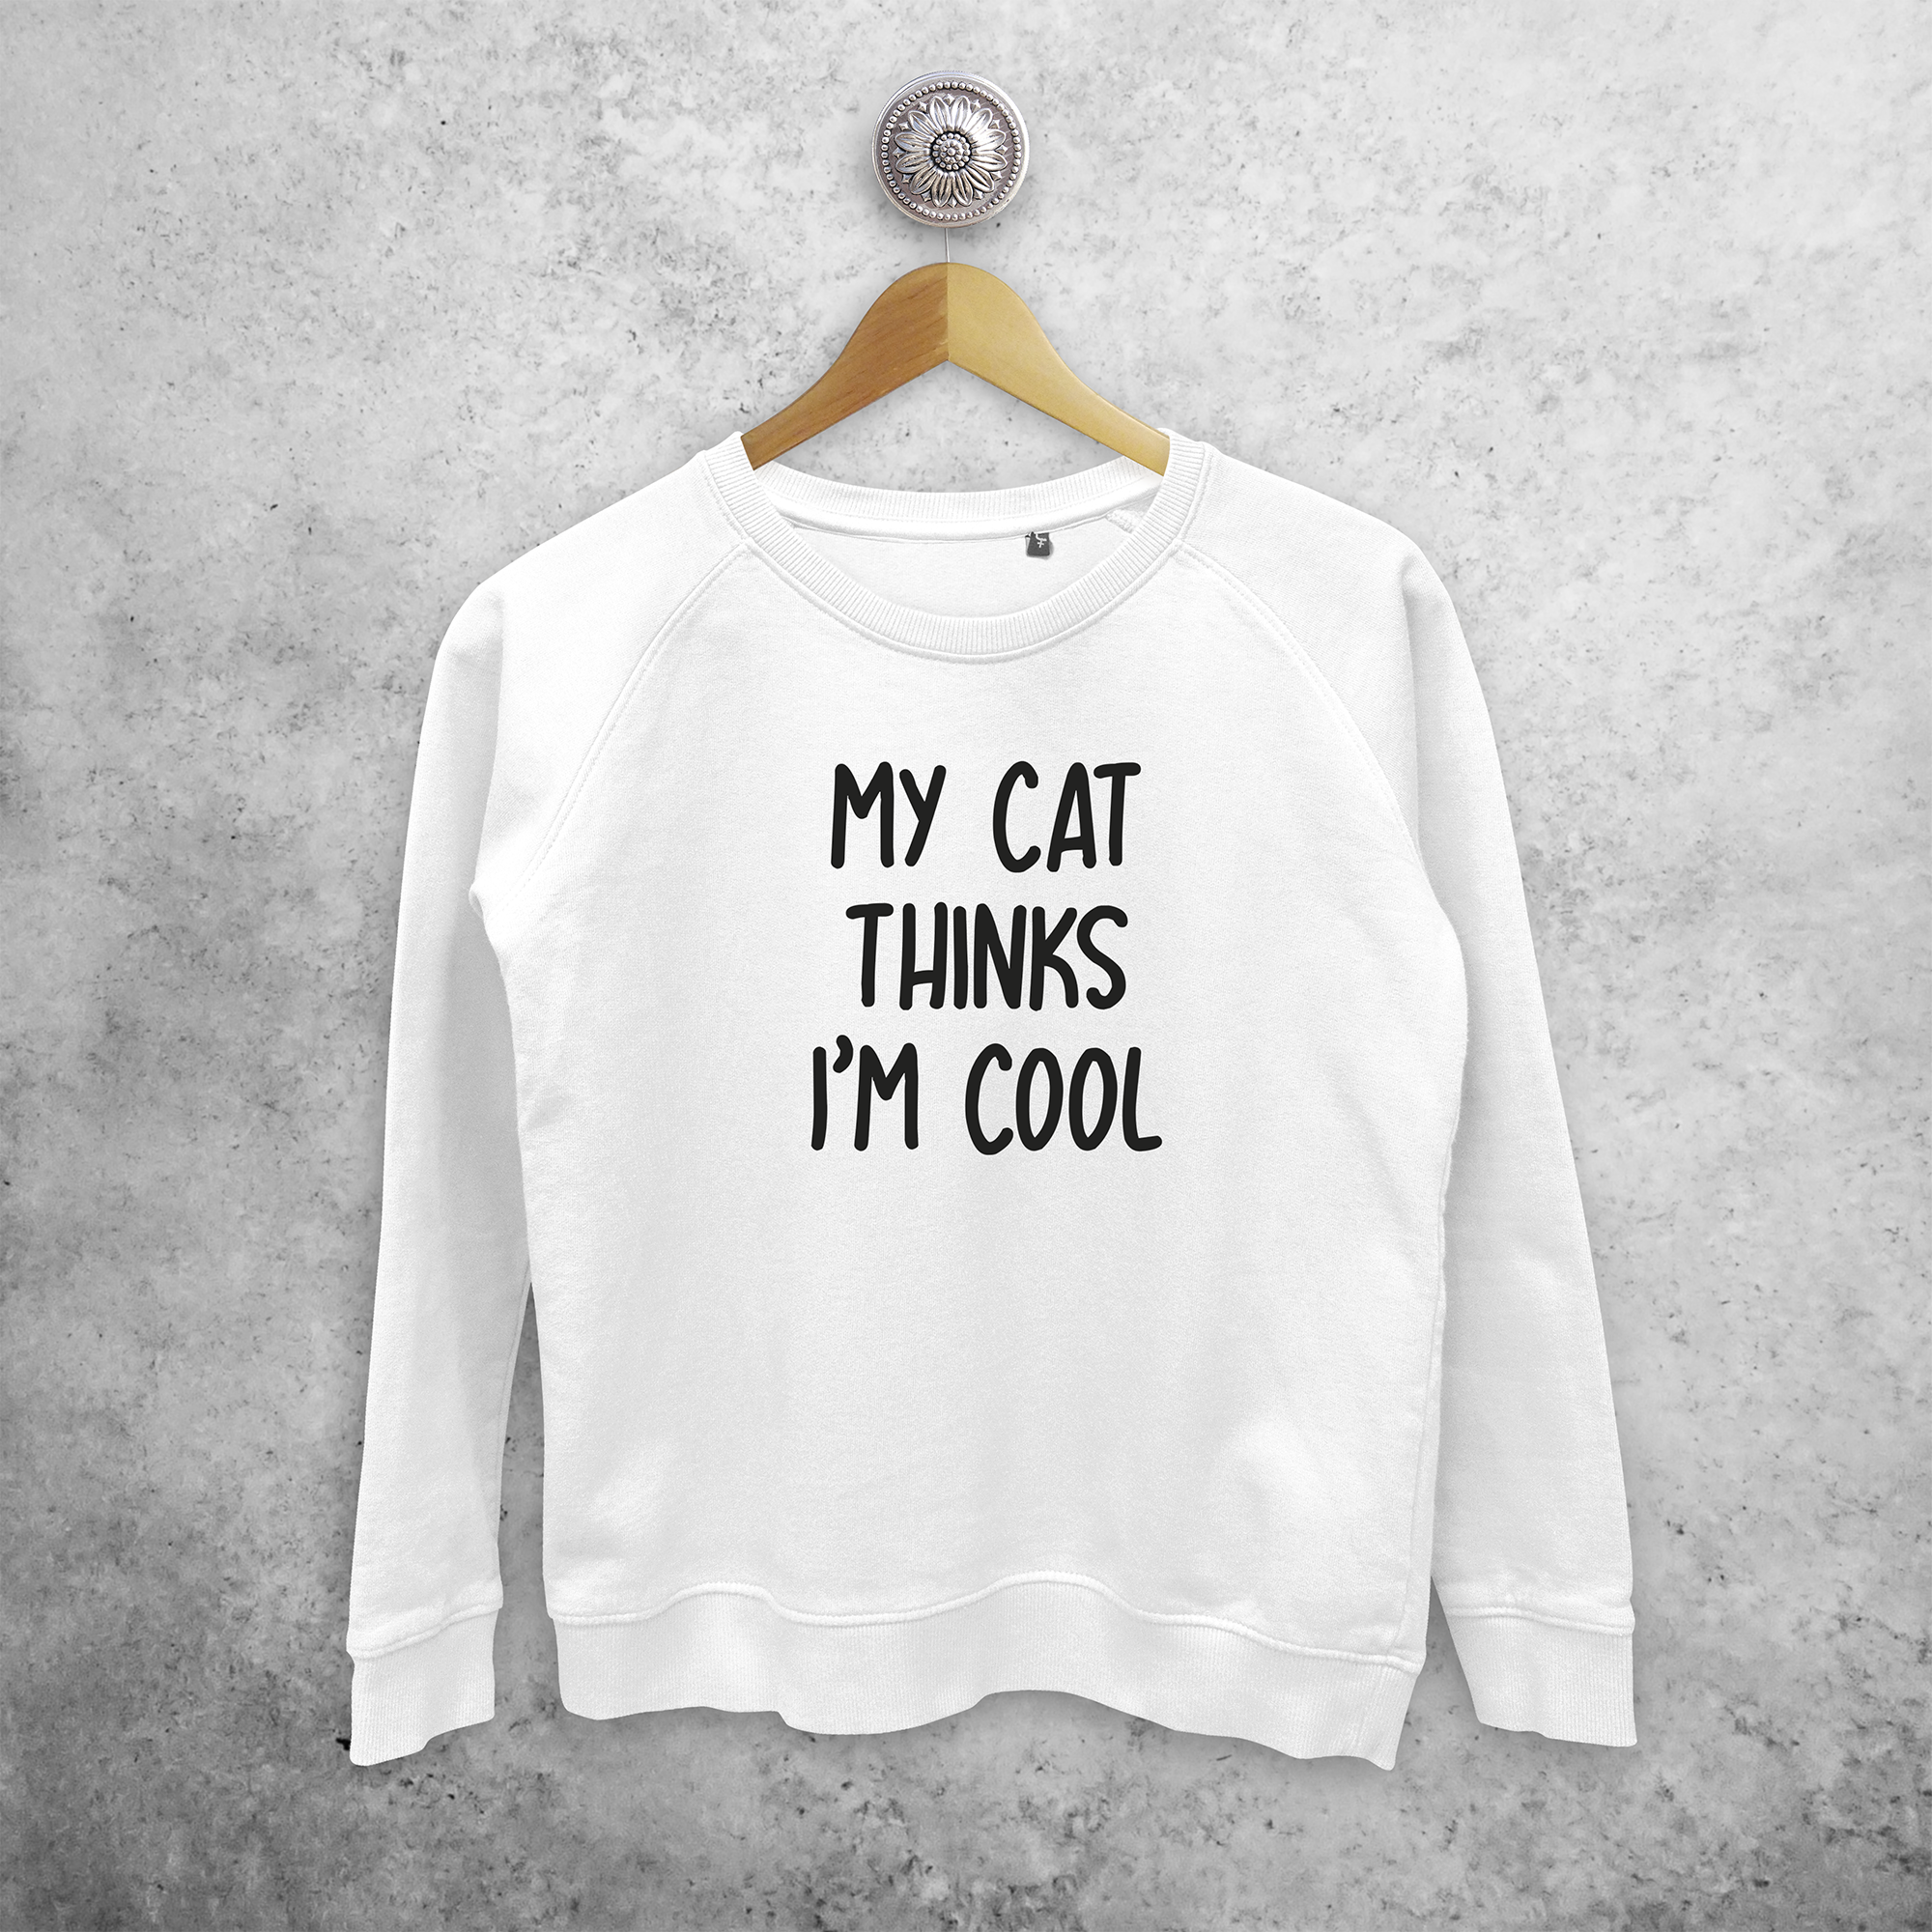 'My cat thinks I'm cool' sweater